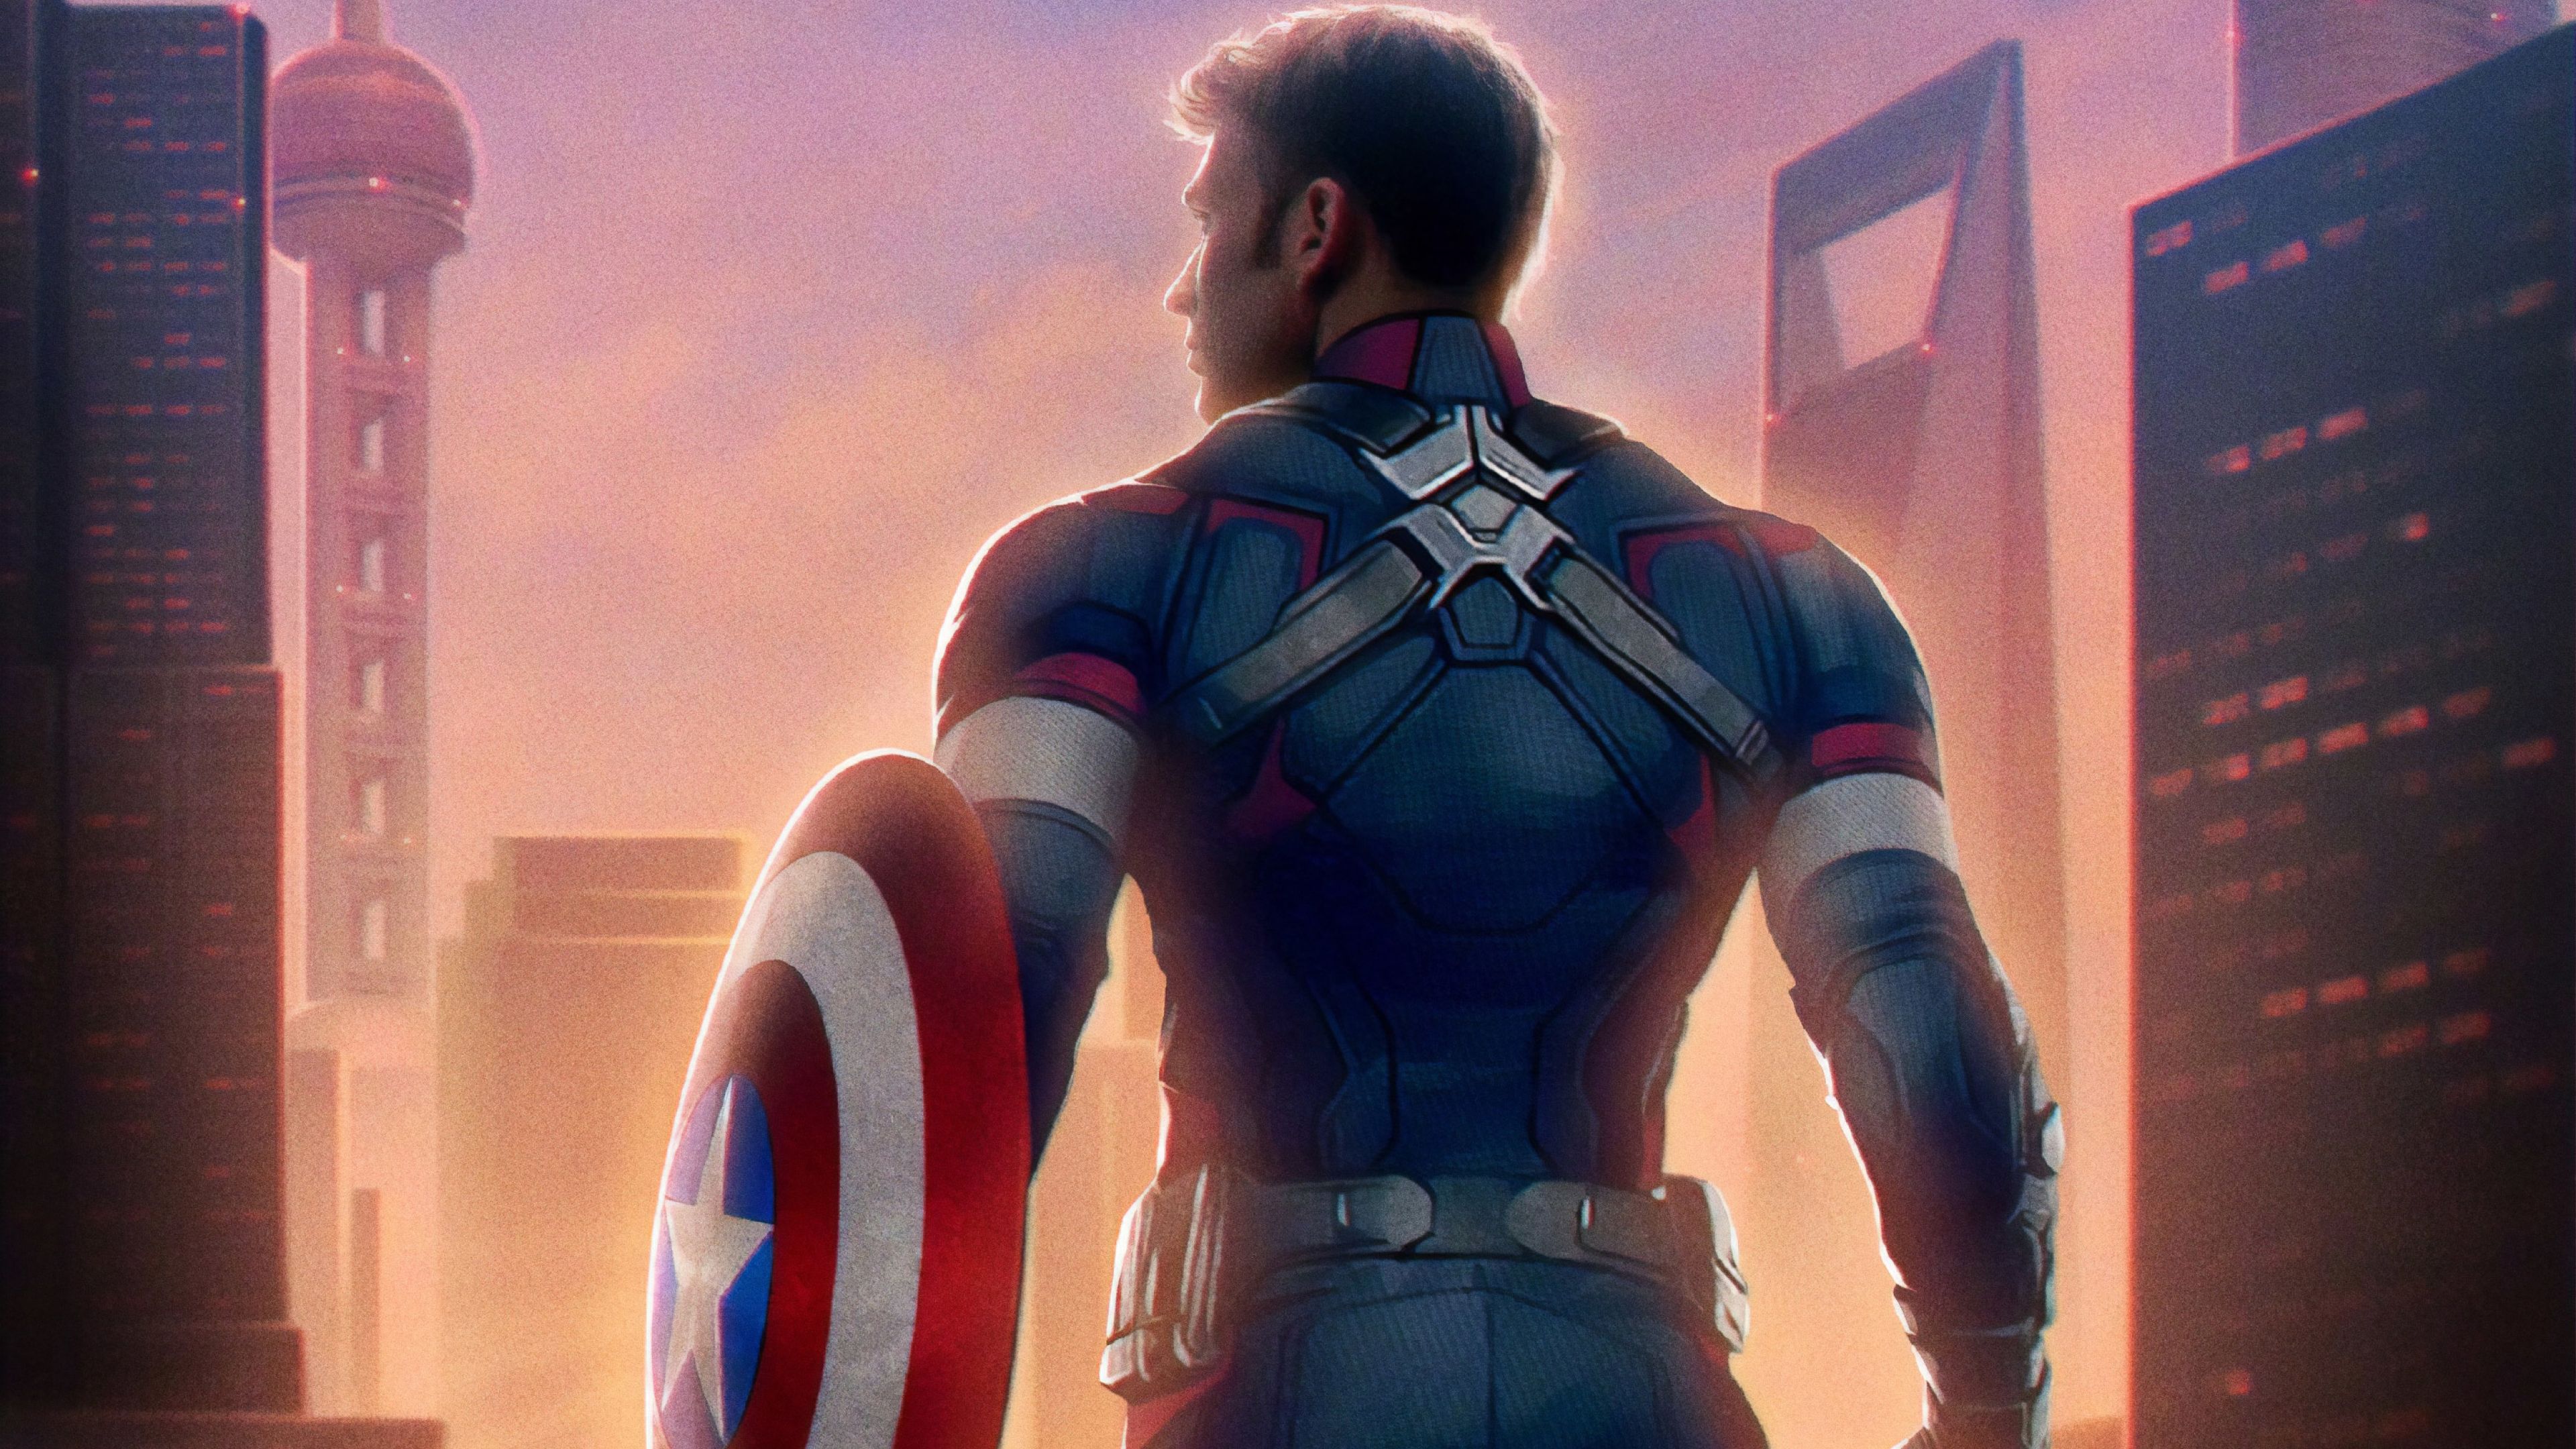 Captain America Avengers Endgame 4K Wallpaper, HD Movies 4K Wallpaper, Image, Photo and Background